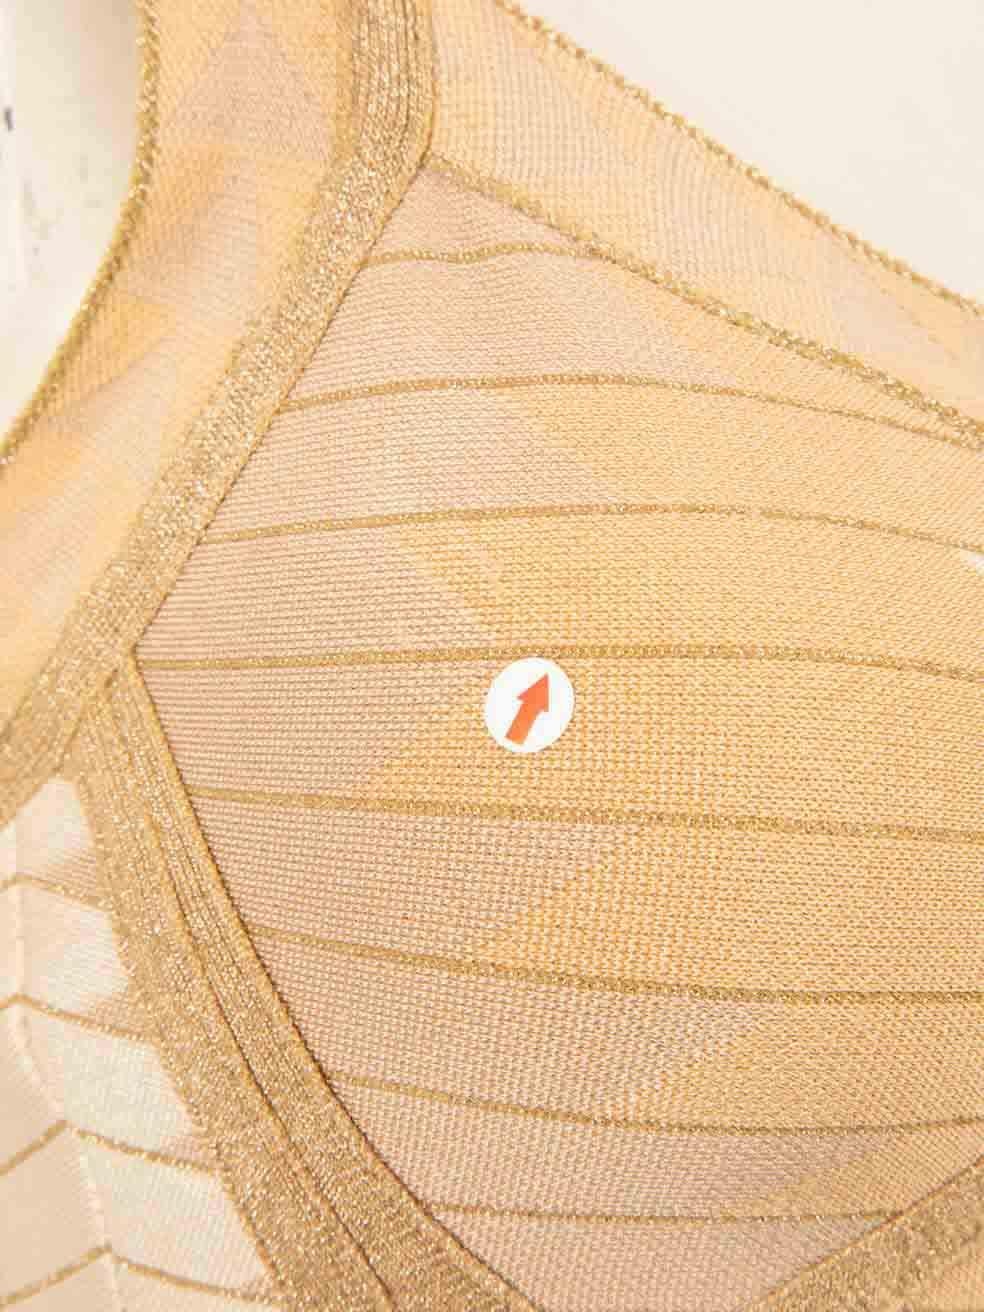 Herve Leger Gold Patterned Bandage Mini Dress Size XXS For Sale 1